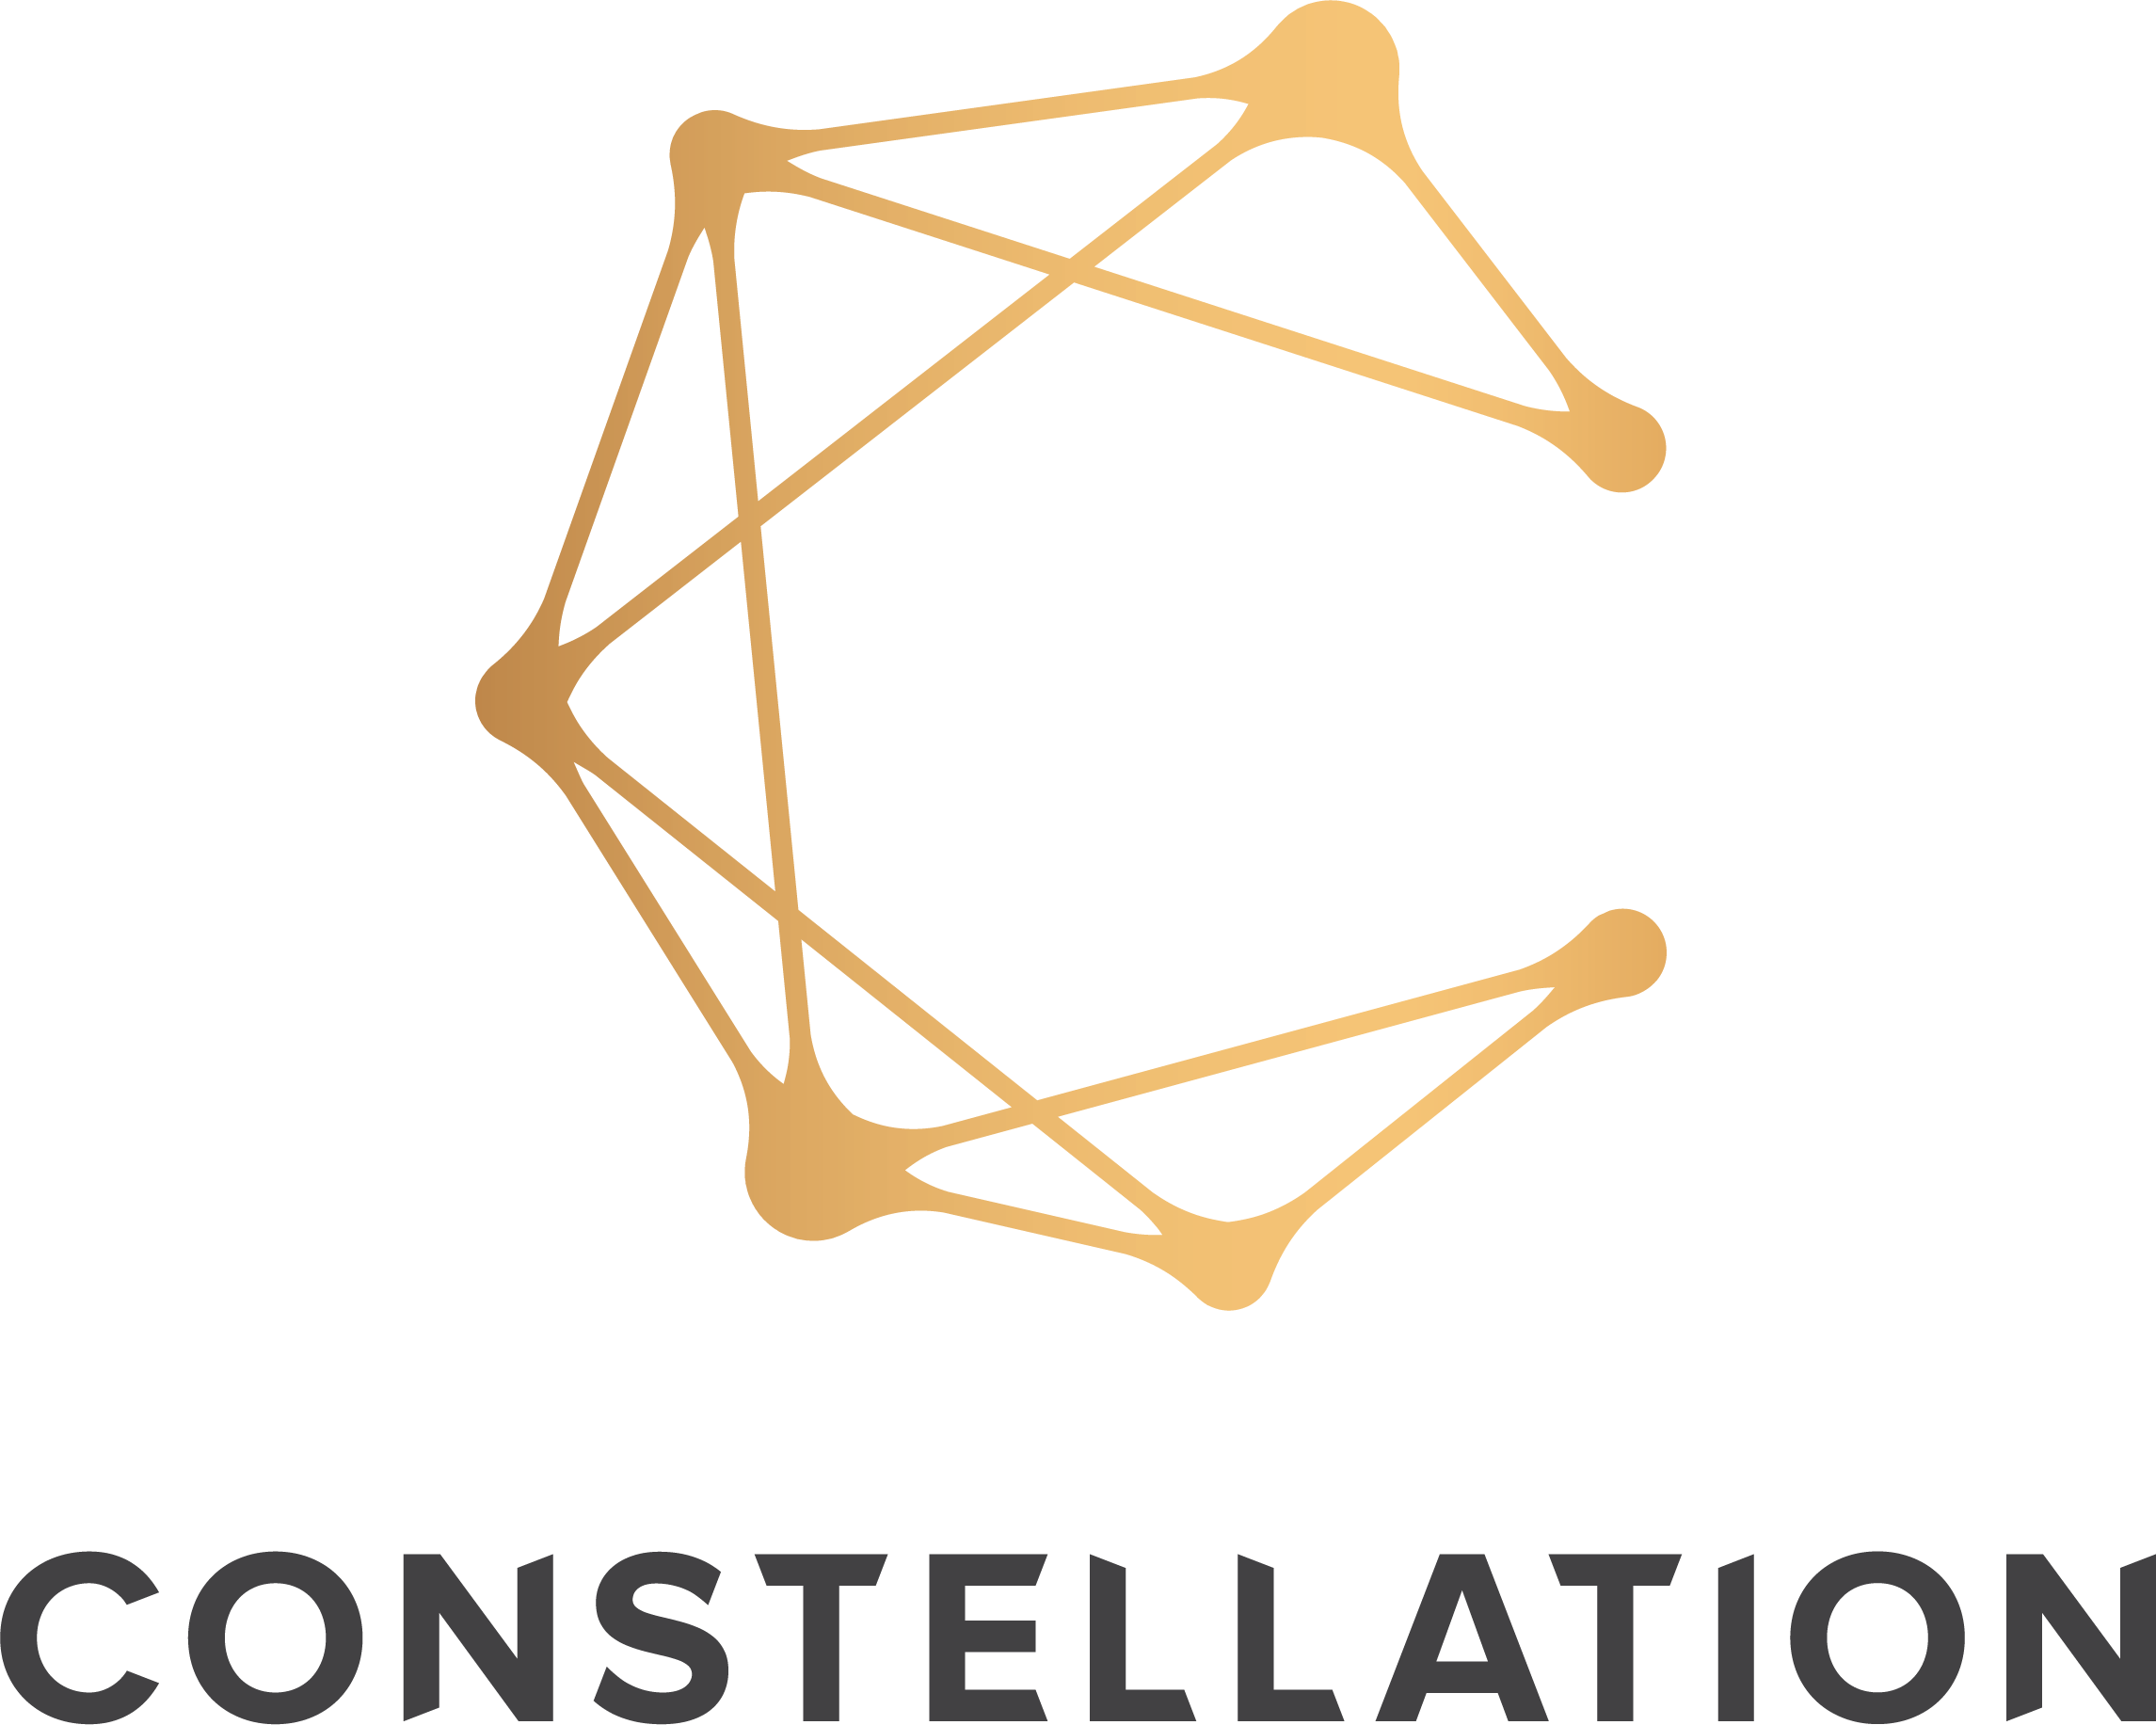 Constellation Agency Logo Constellations, Star Cluster - Marketing Company Logo Ideas (2291x1833)